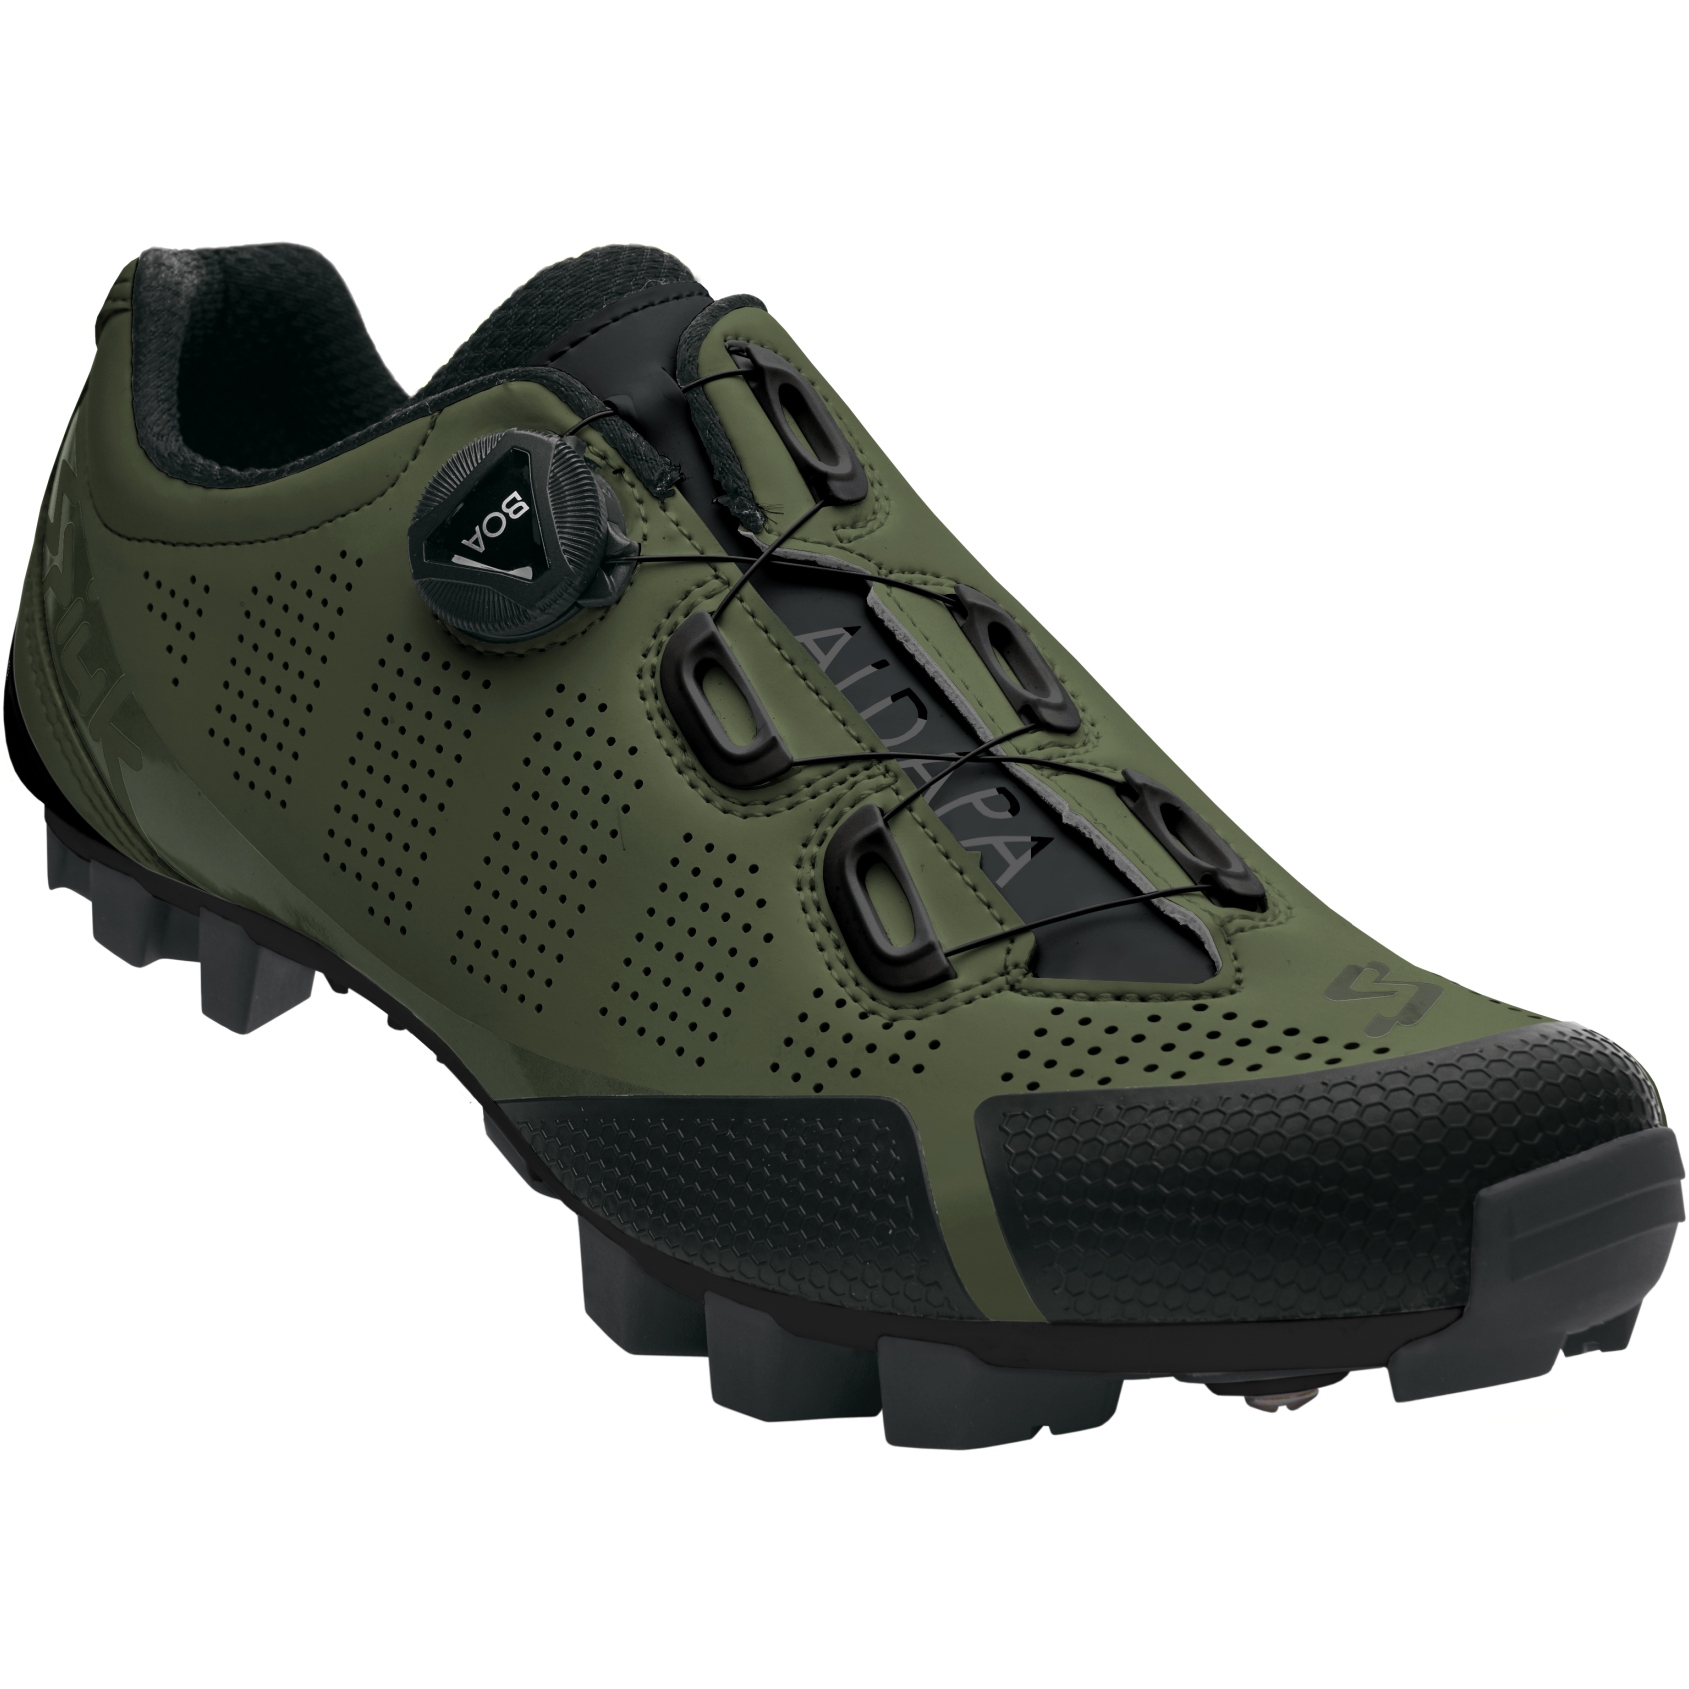 Produktbild von Spiuk Aldapa MTB Schuhe - khaki green